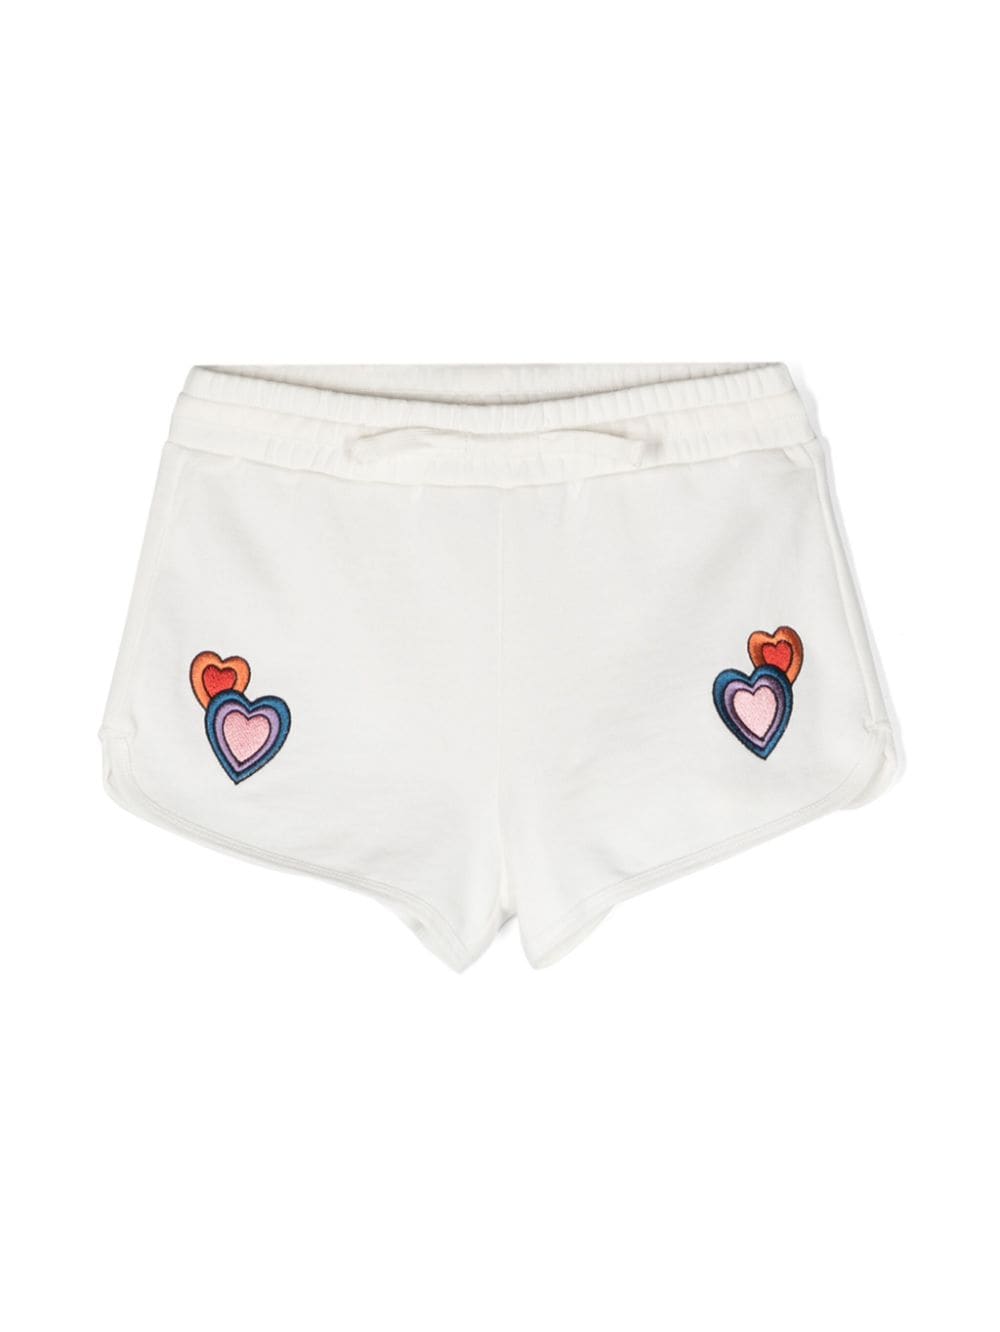 White Bermuda shorts for girls